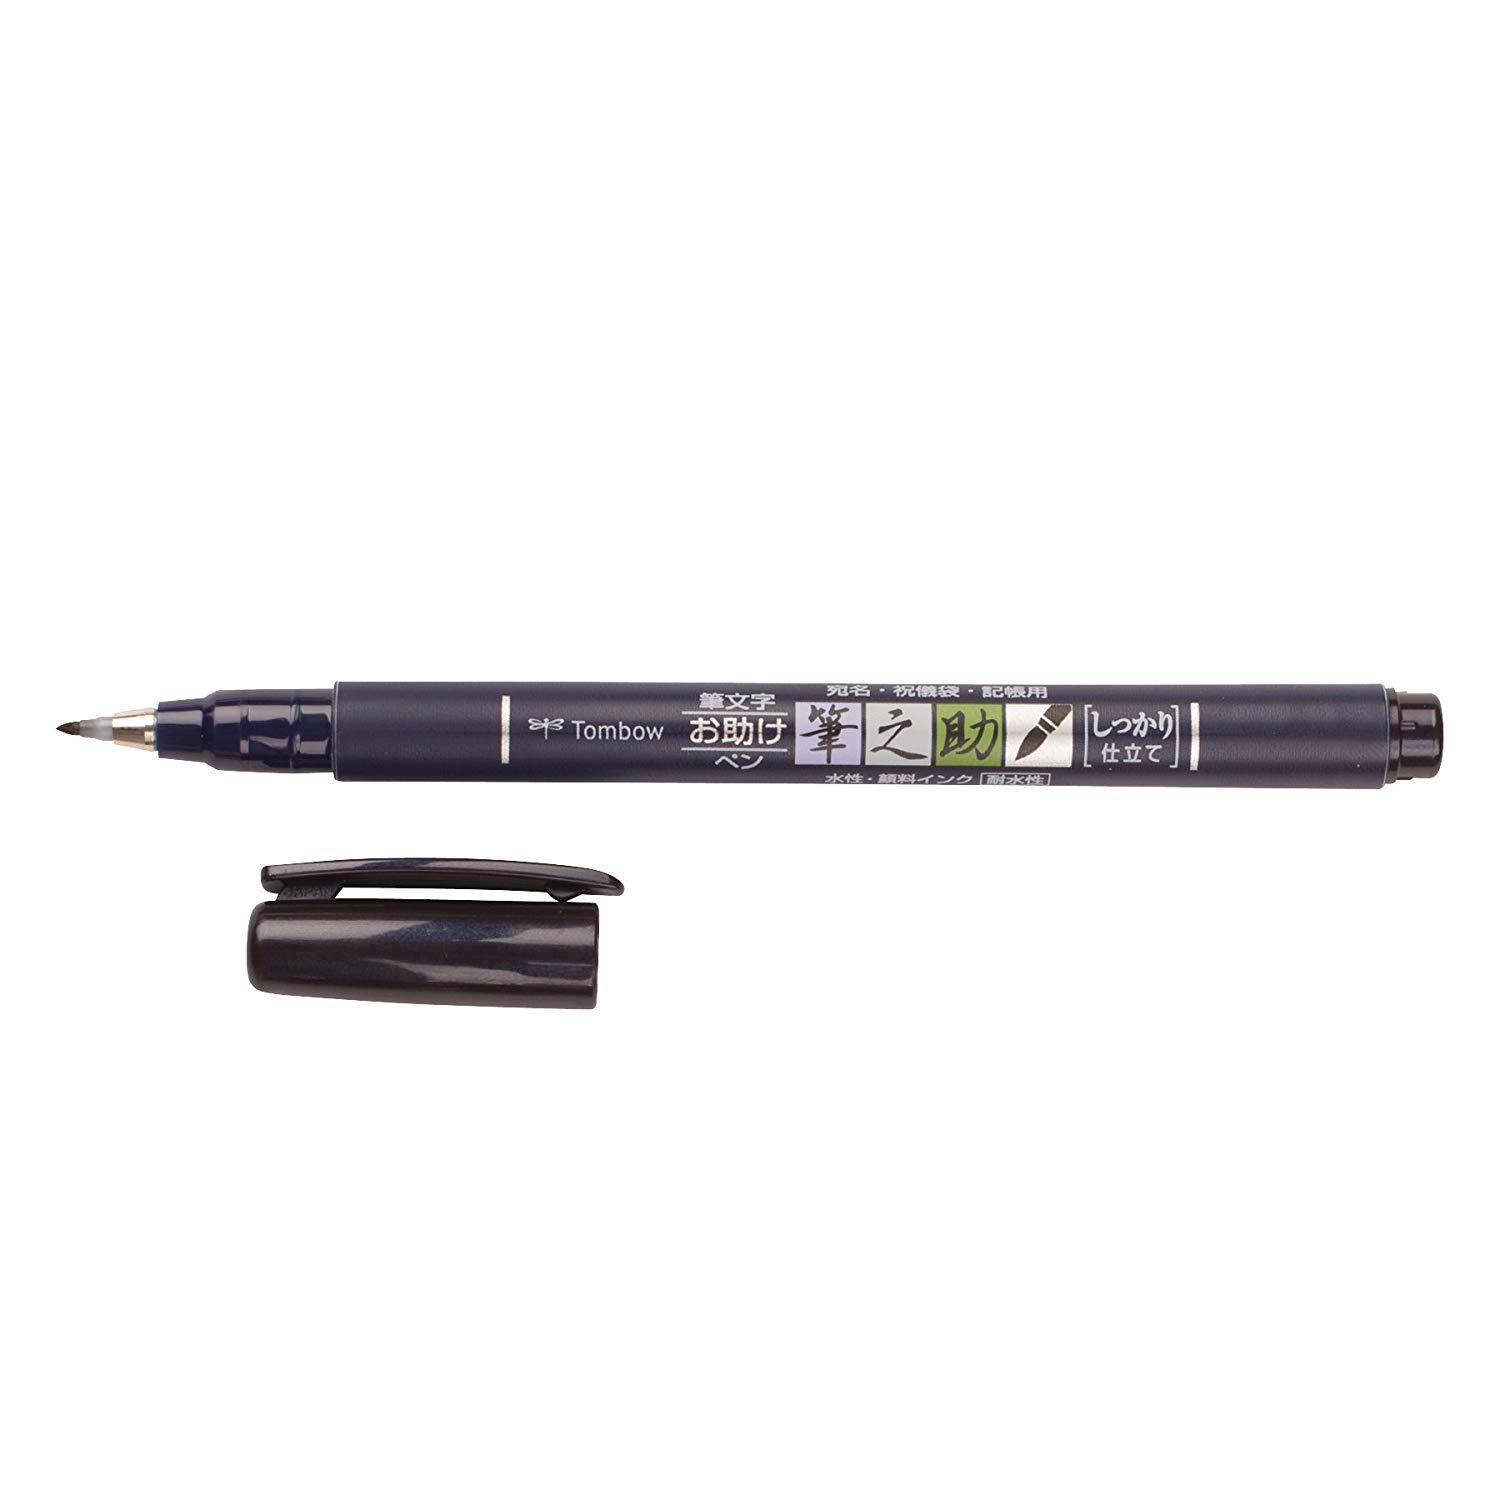 Brustro Fude Hard Tip Brush Pen (Set Of 4)